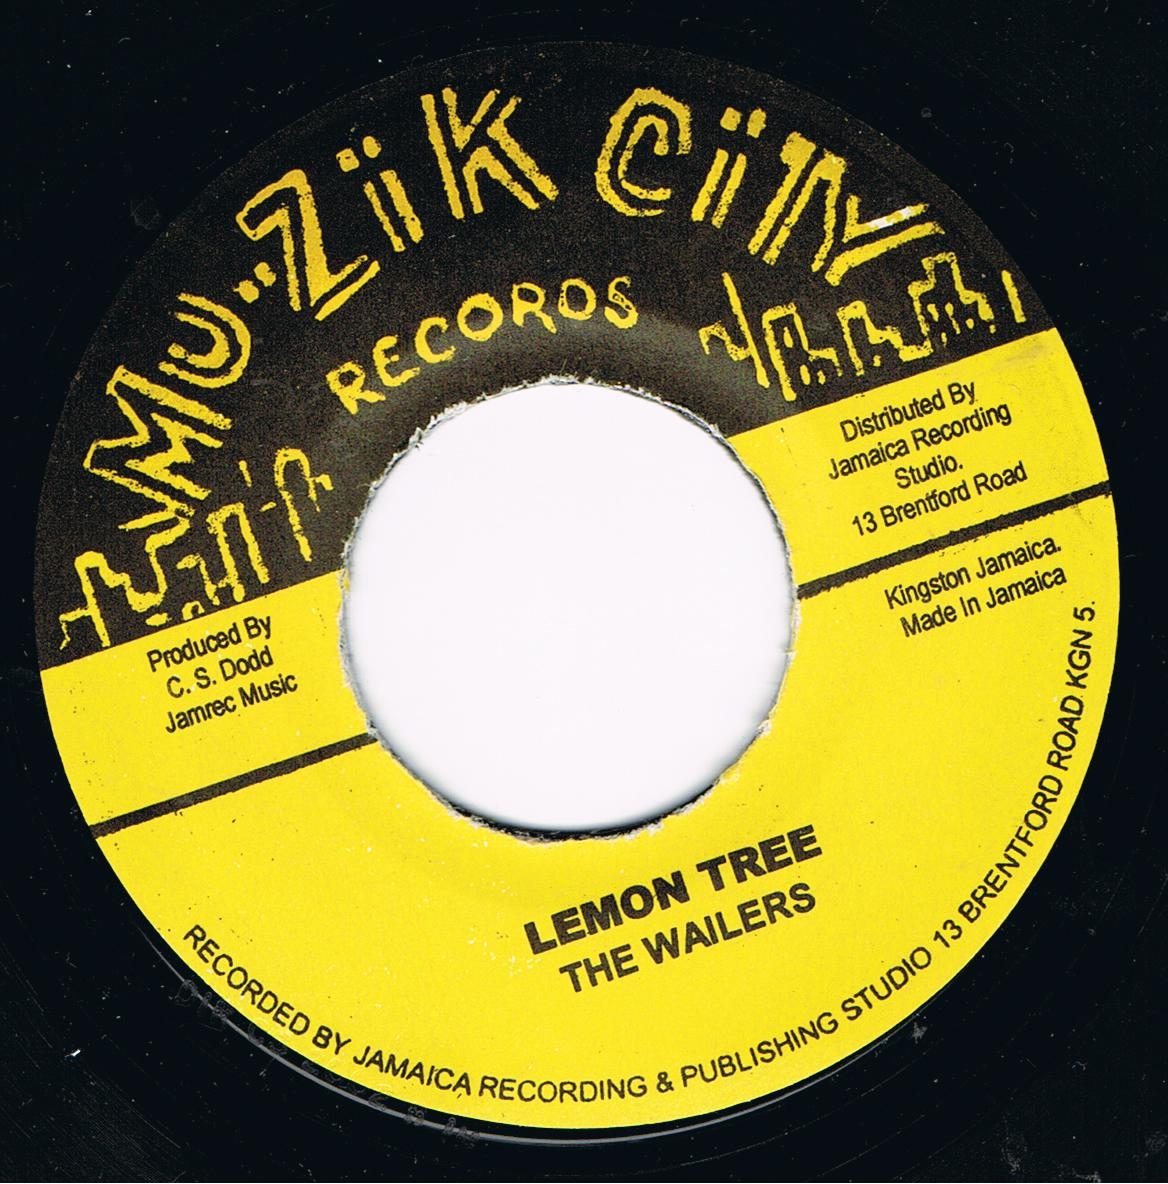 The Wailers - Lemon Tree / Peter Austin & Hortense Ellis - I Want Money (Original Stamper 7")